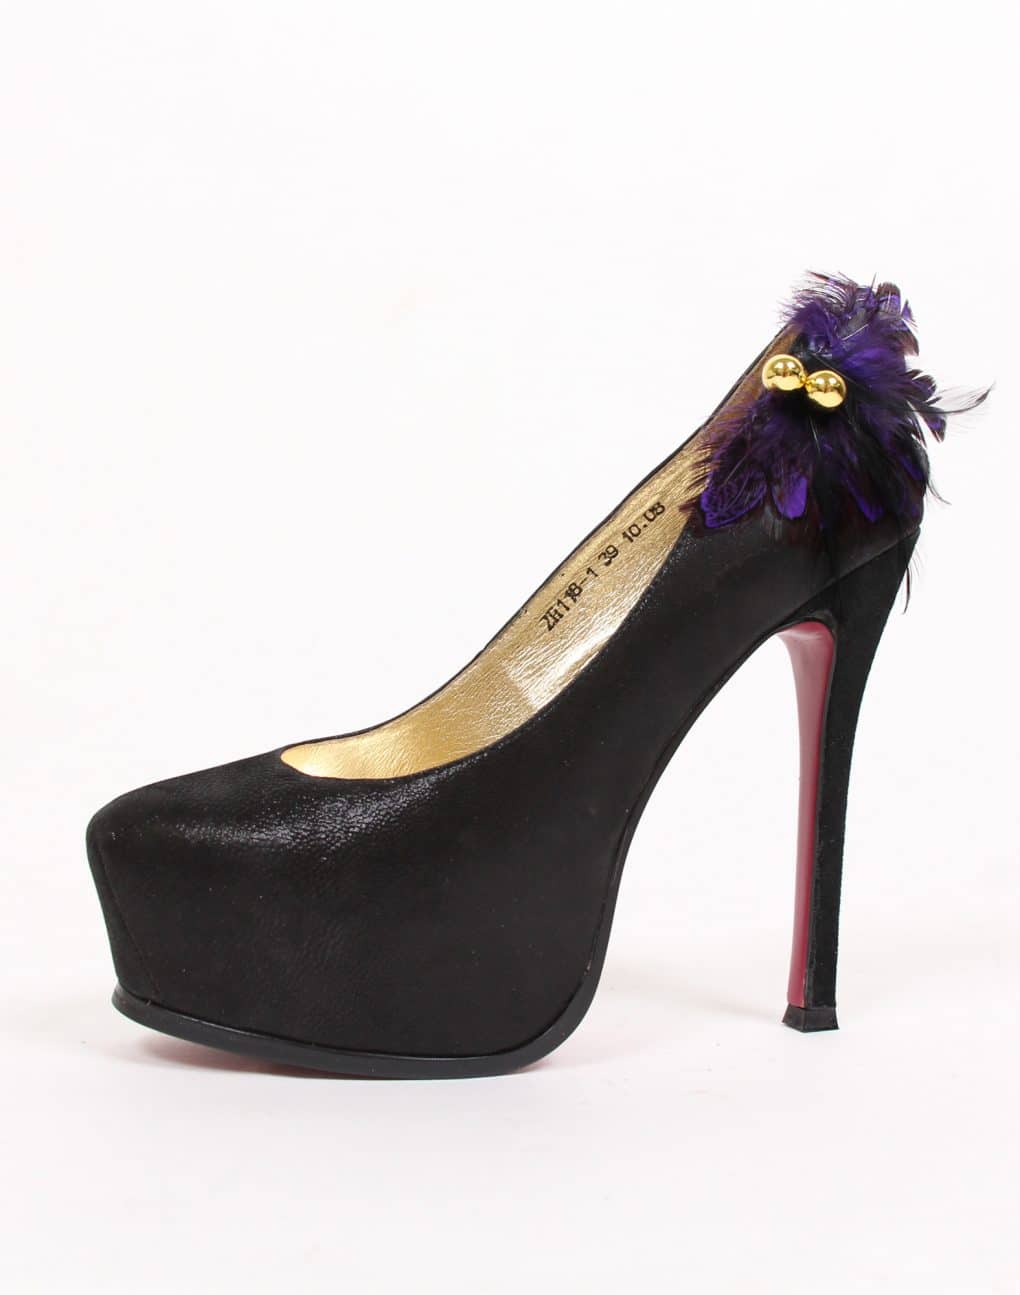 Black-platform-high-heels-feather-detail-Minette-Alila